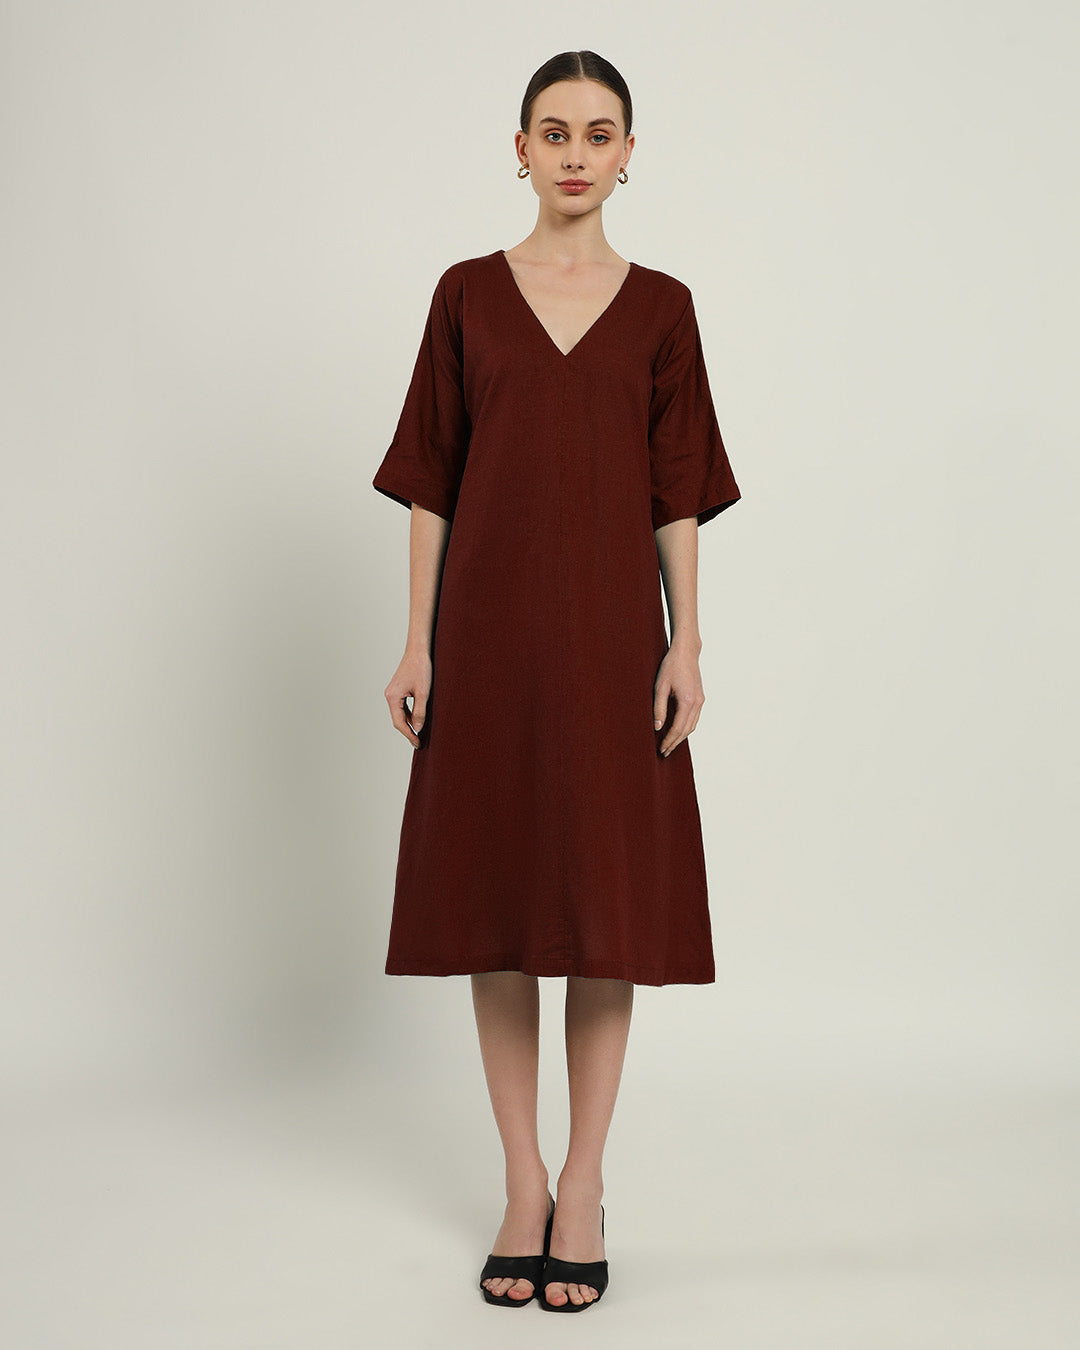 The Mildura Rouge Cotton Dress